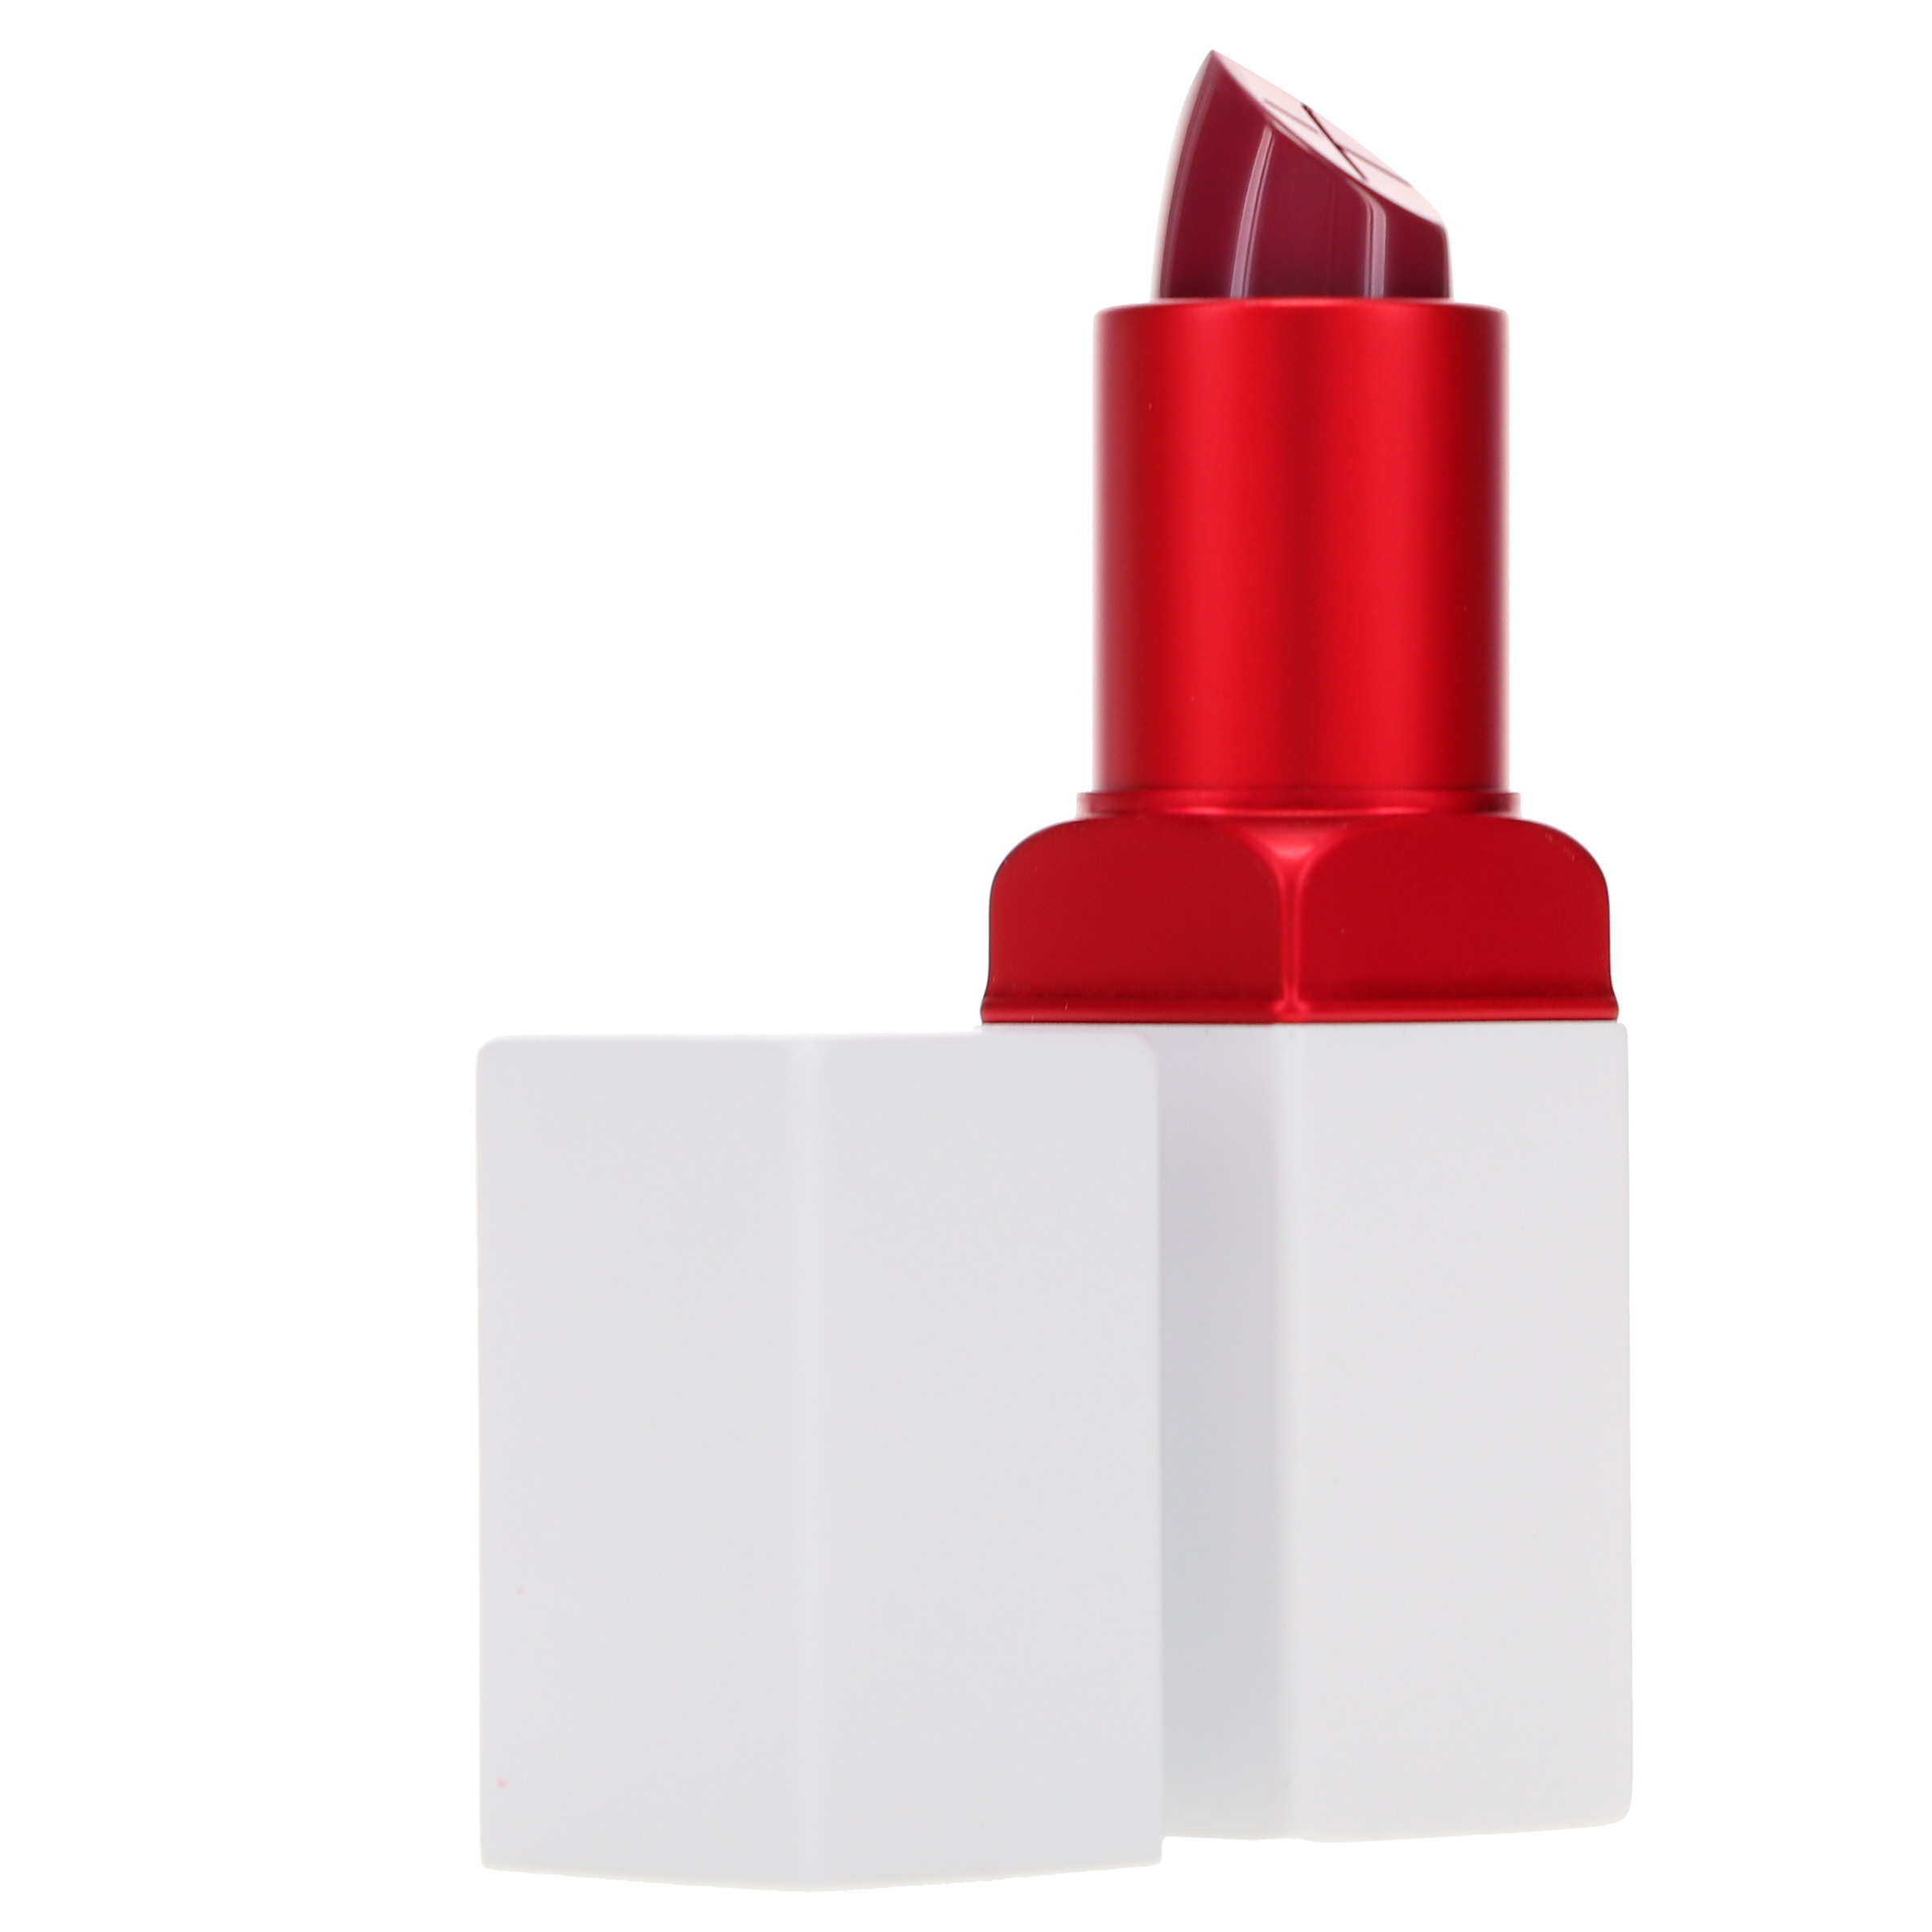 Smashbox Be Legendary Prime & Plush Lipstick .11 oz / 3.4 gm It's A Mood - image 3 of 8